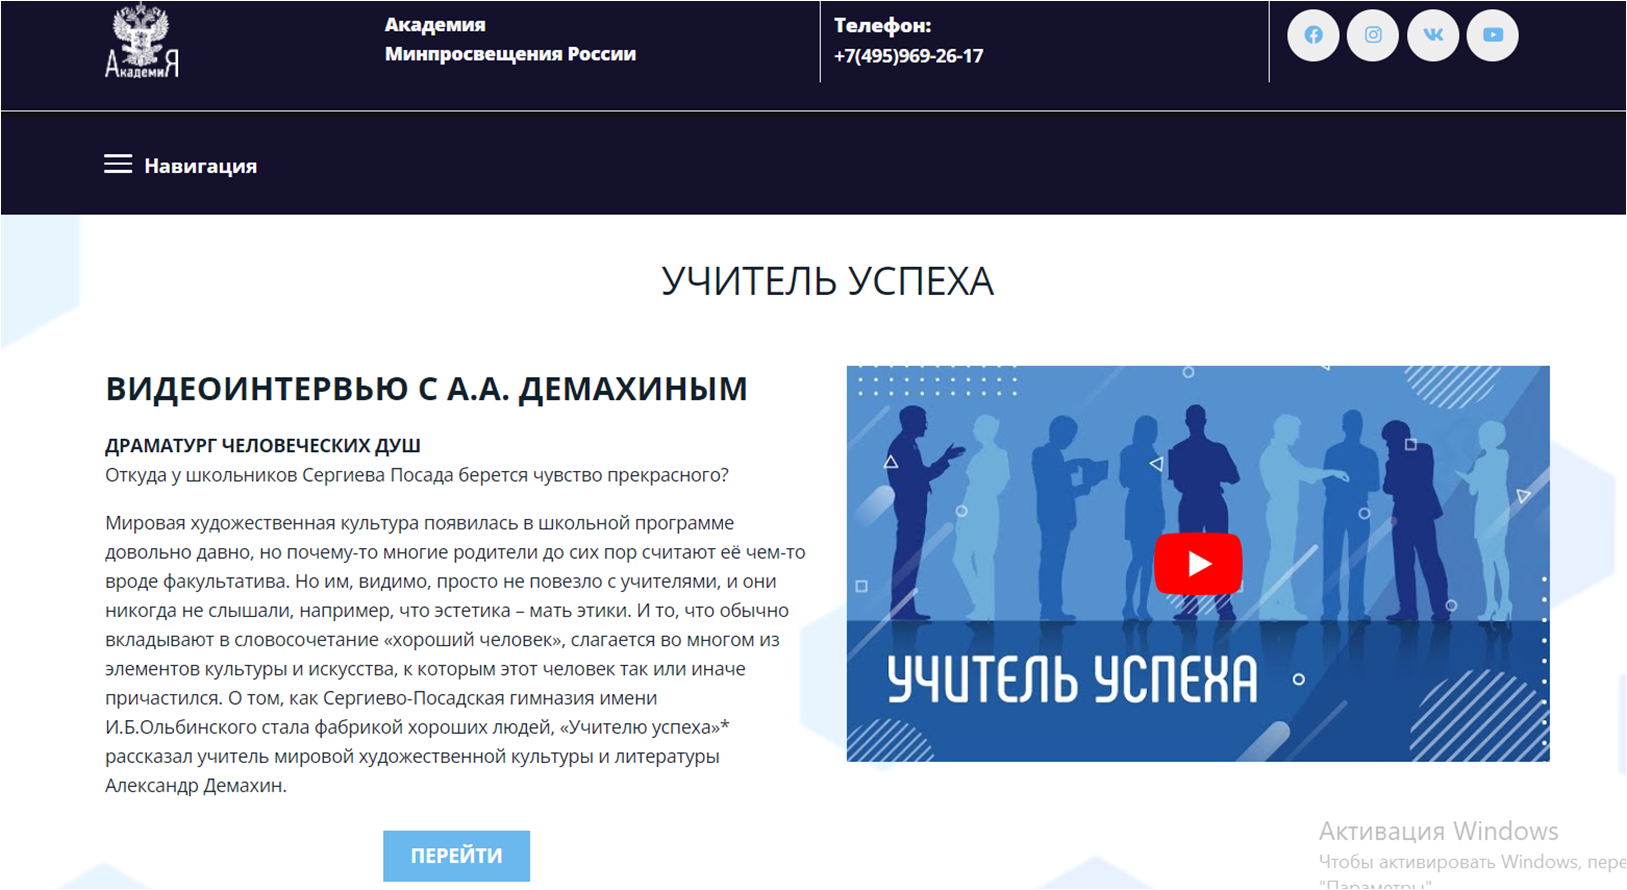 Https education apkpro ru simulators 39